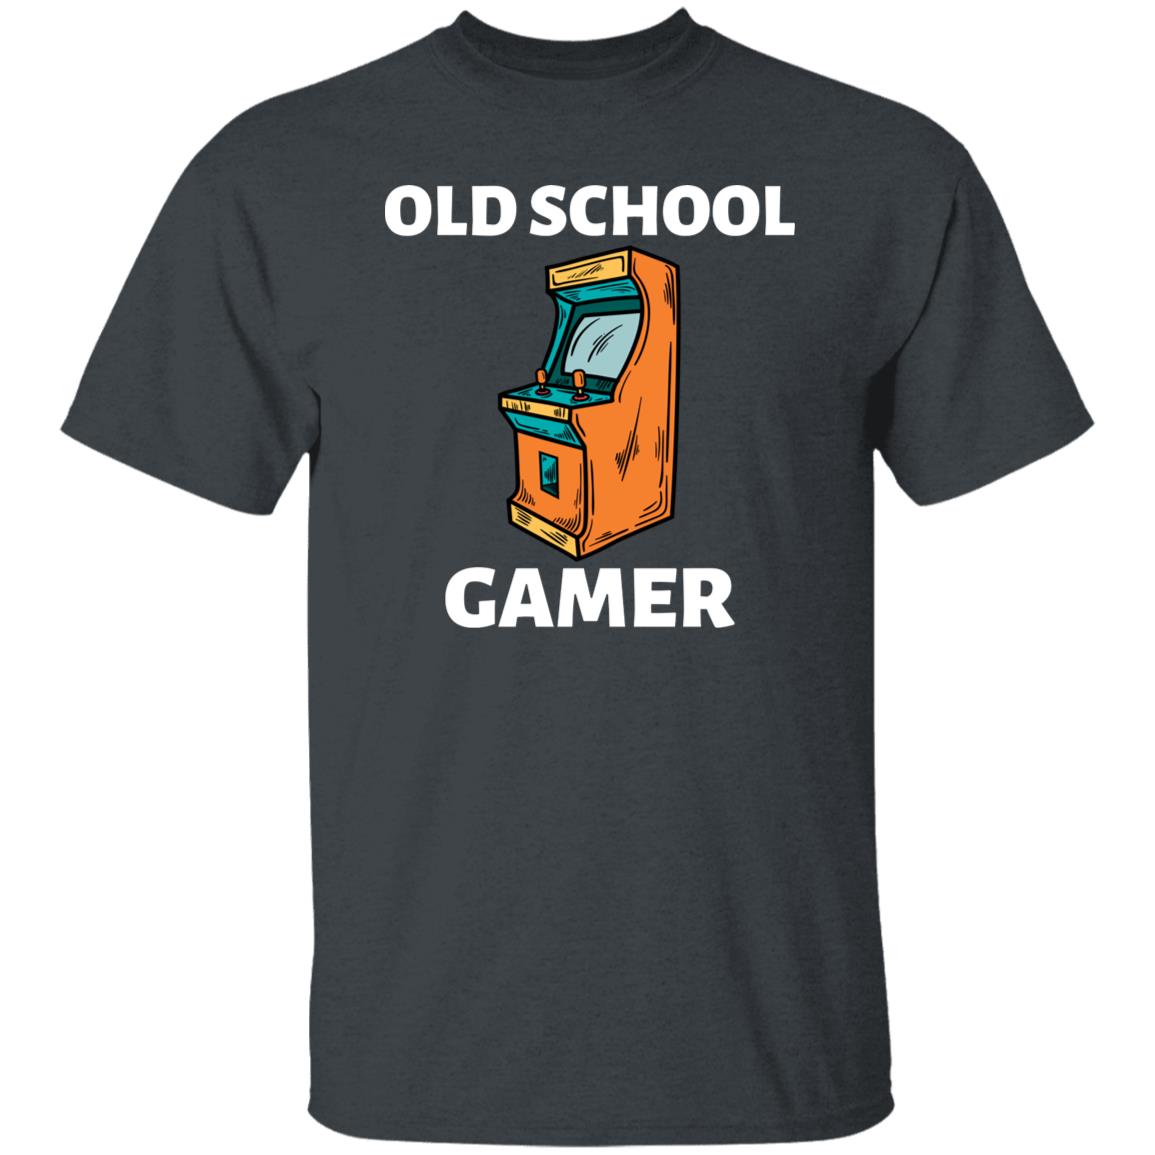 Old School Gamer Shirt, Gamer T-shirt, O.G. Old School Gamer t-shirt